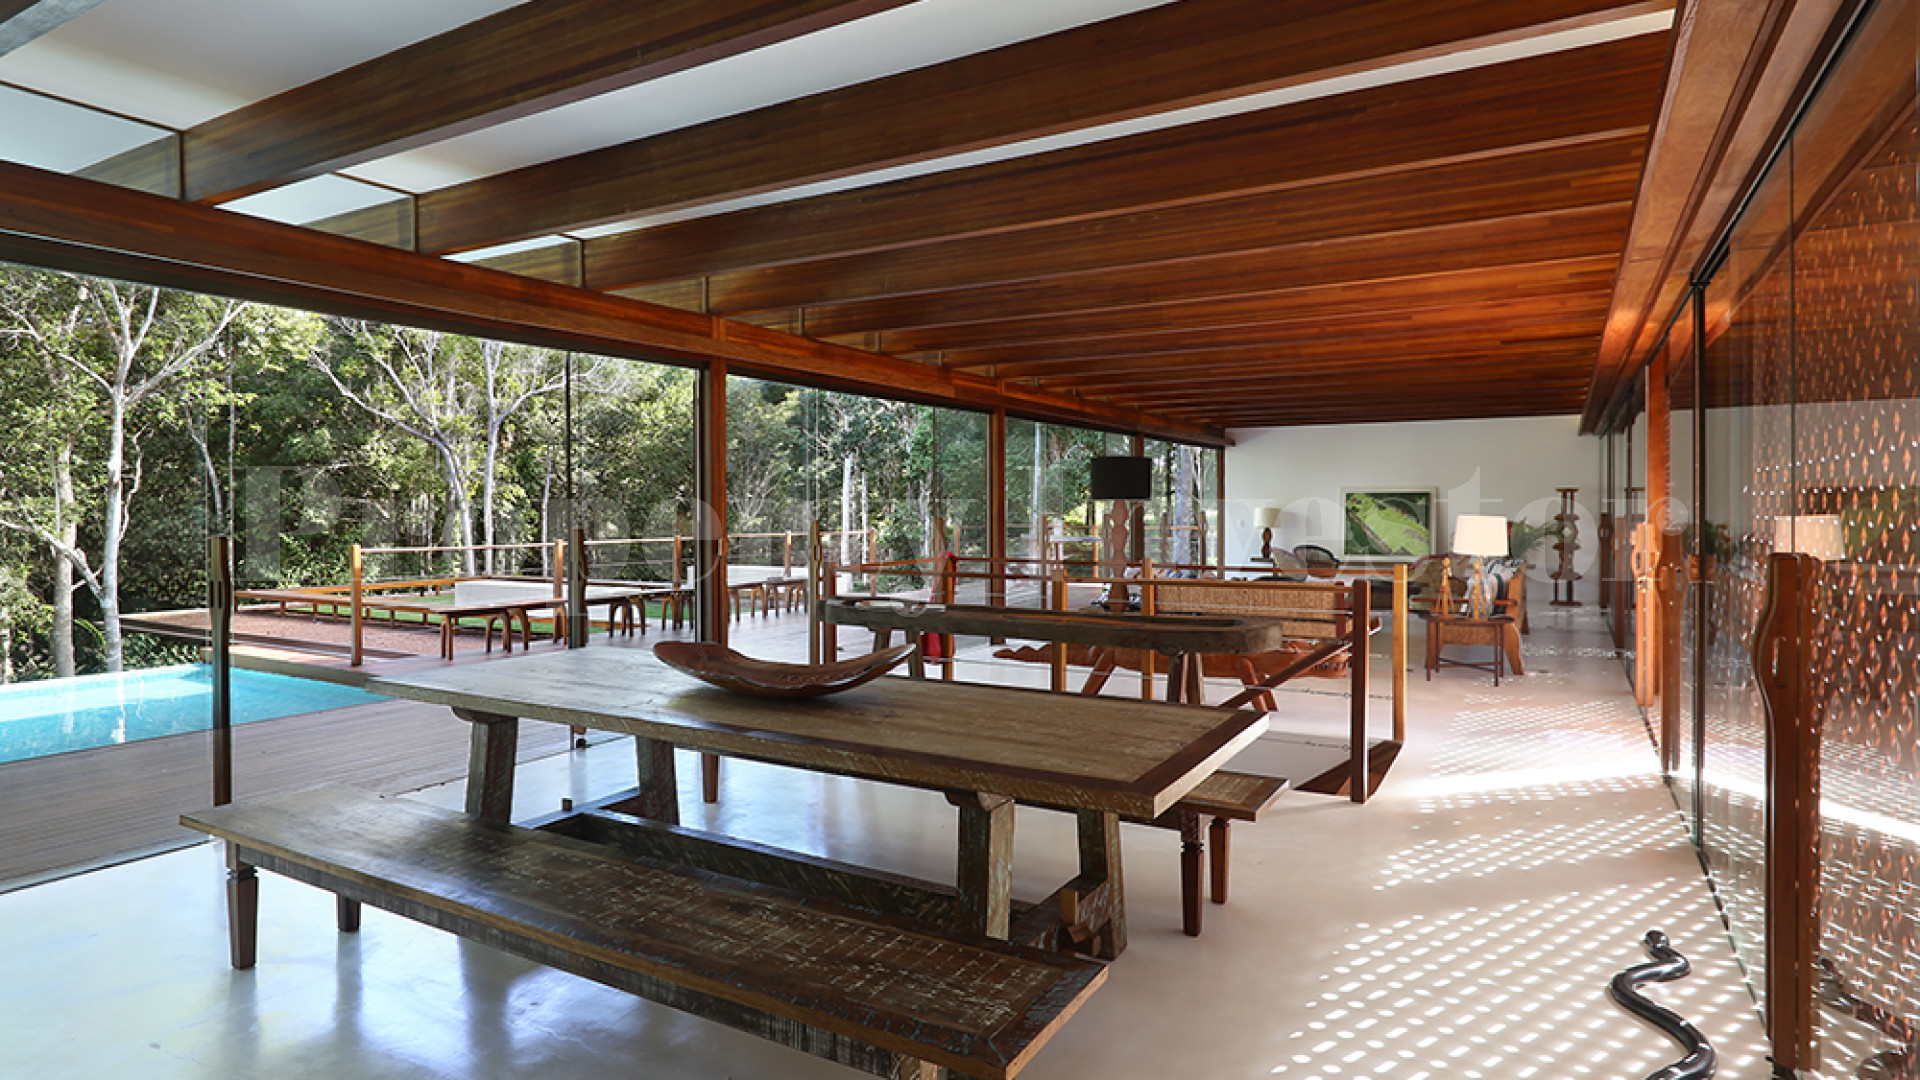 One-of-a-Kind 6 Bedroom Tropical Luxury Designer Rainforest Villa for Sale in Trancoso, Brazil